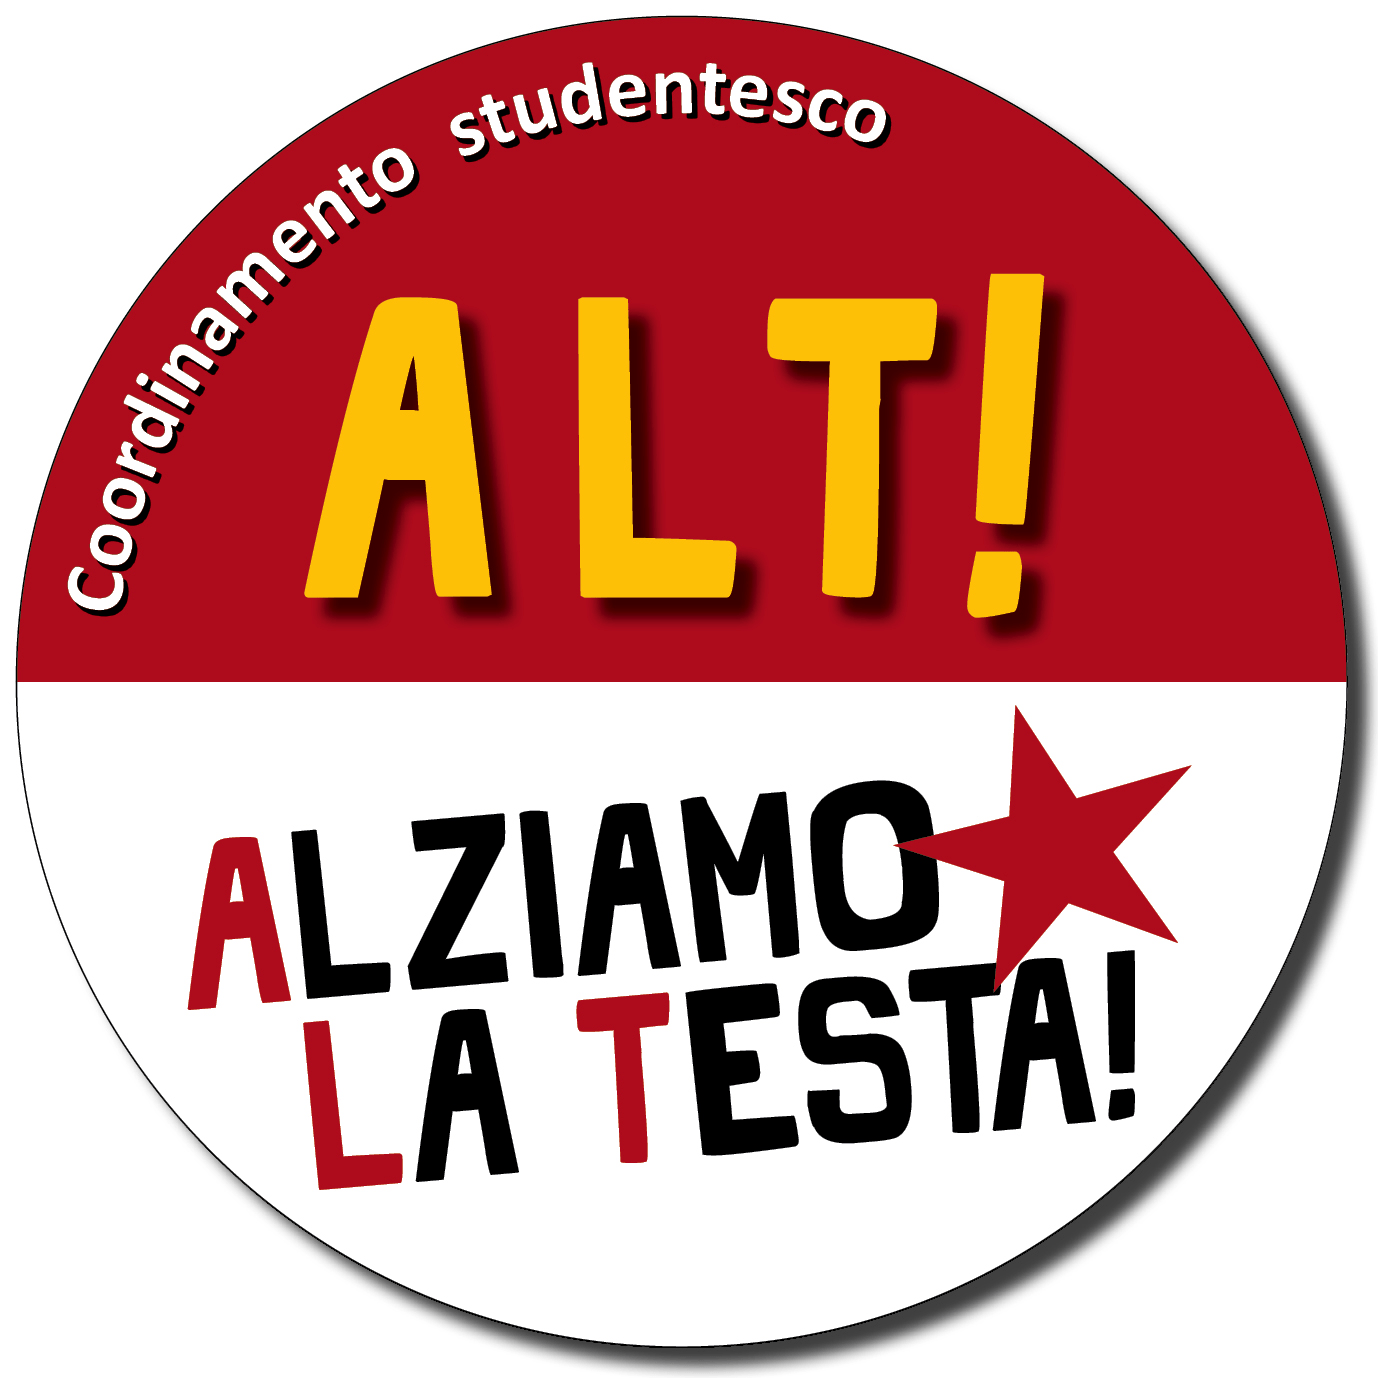 ALT logo